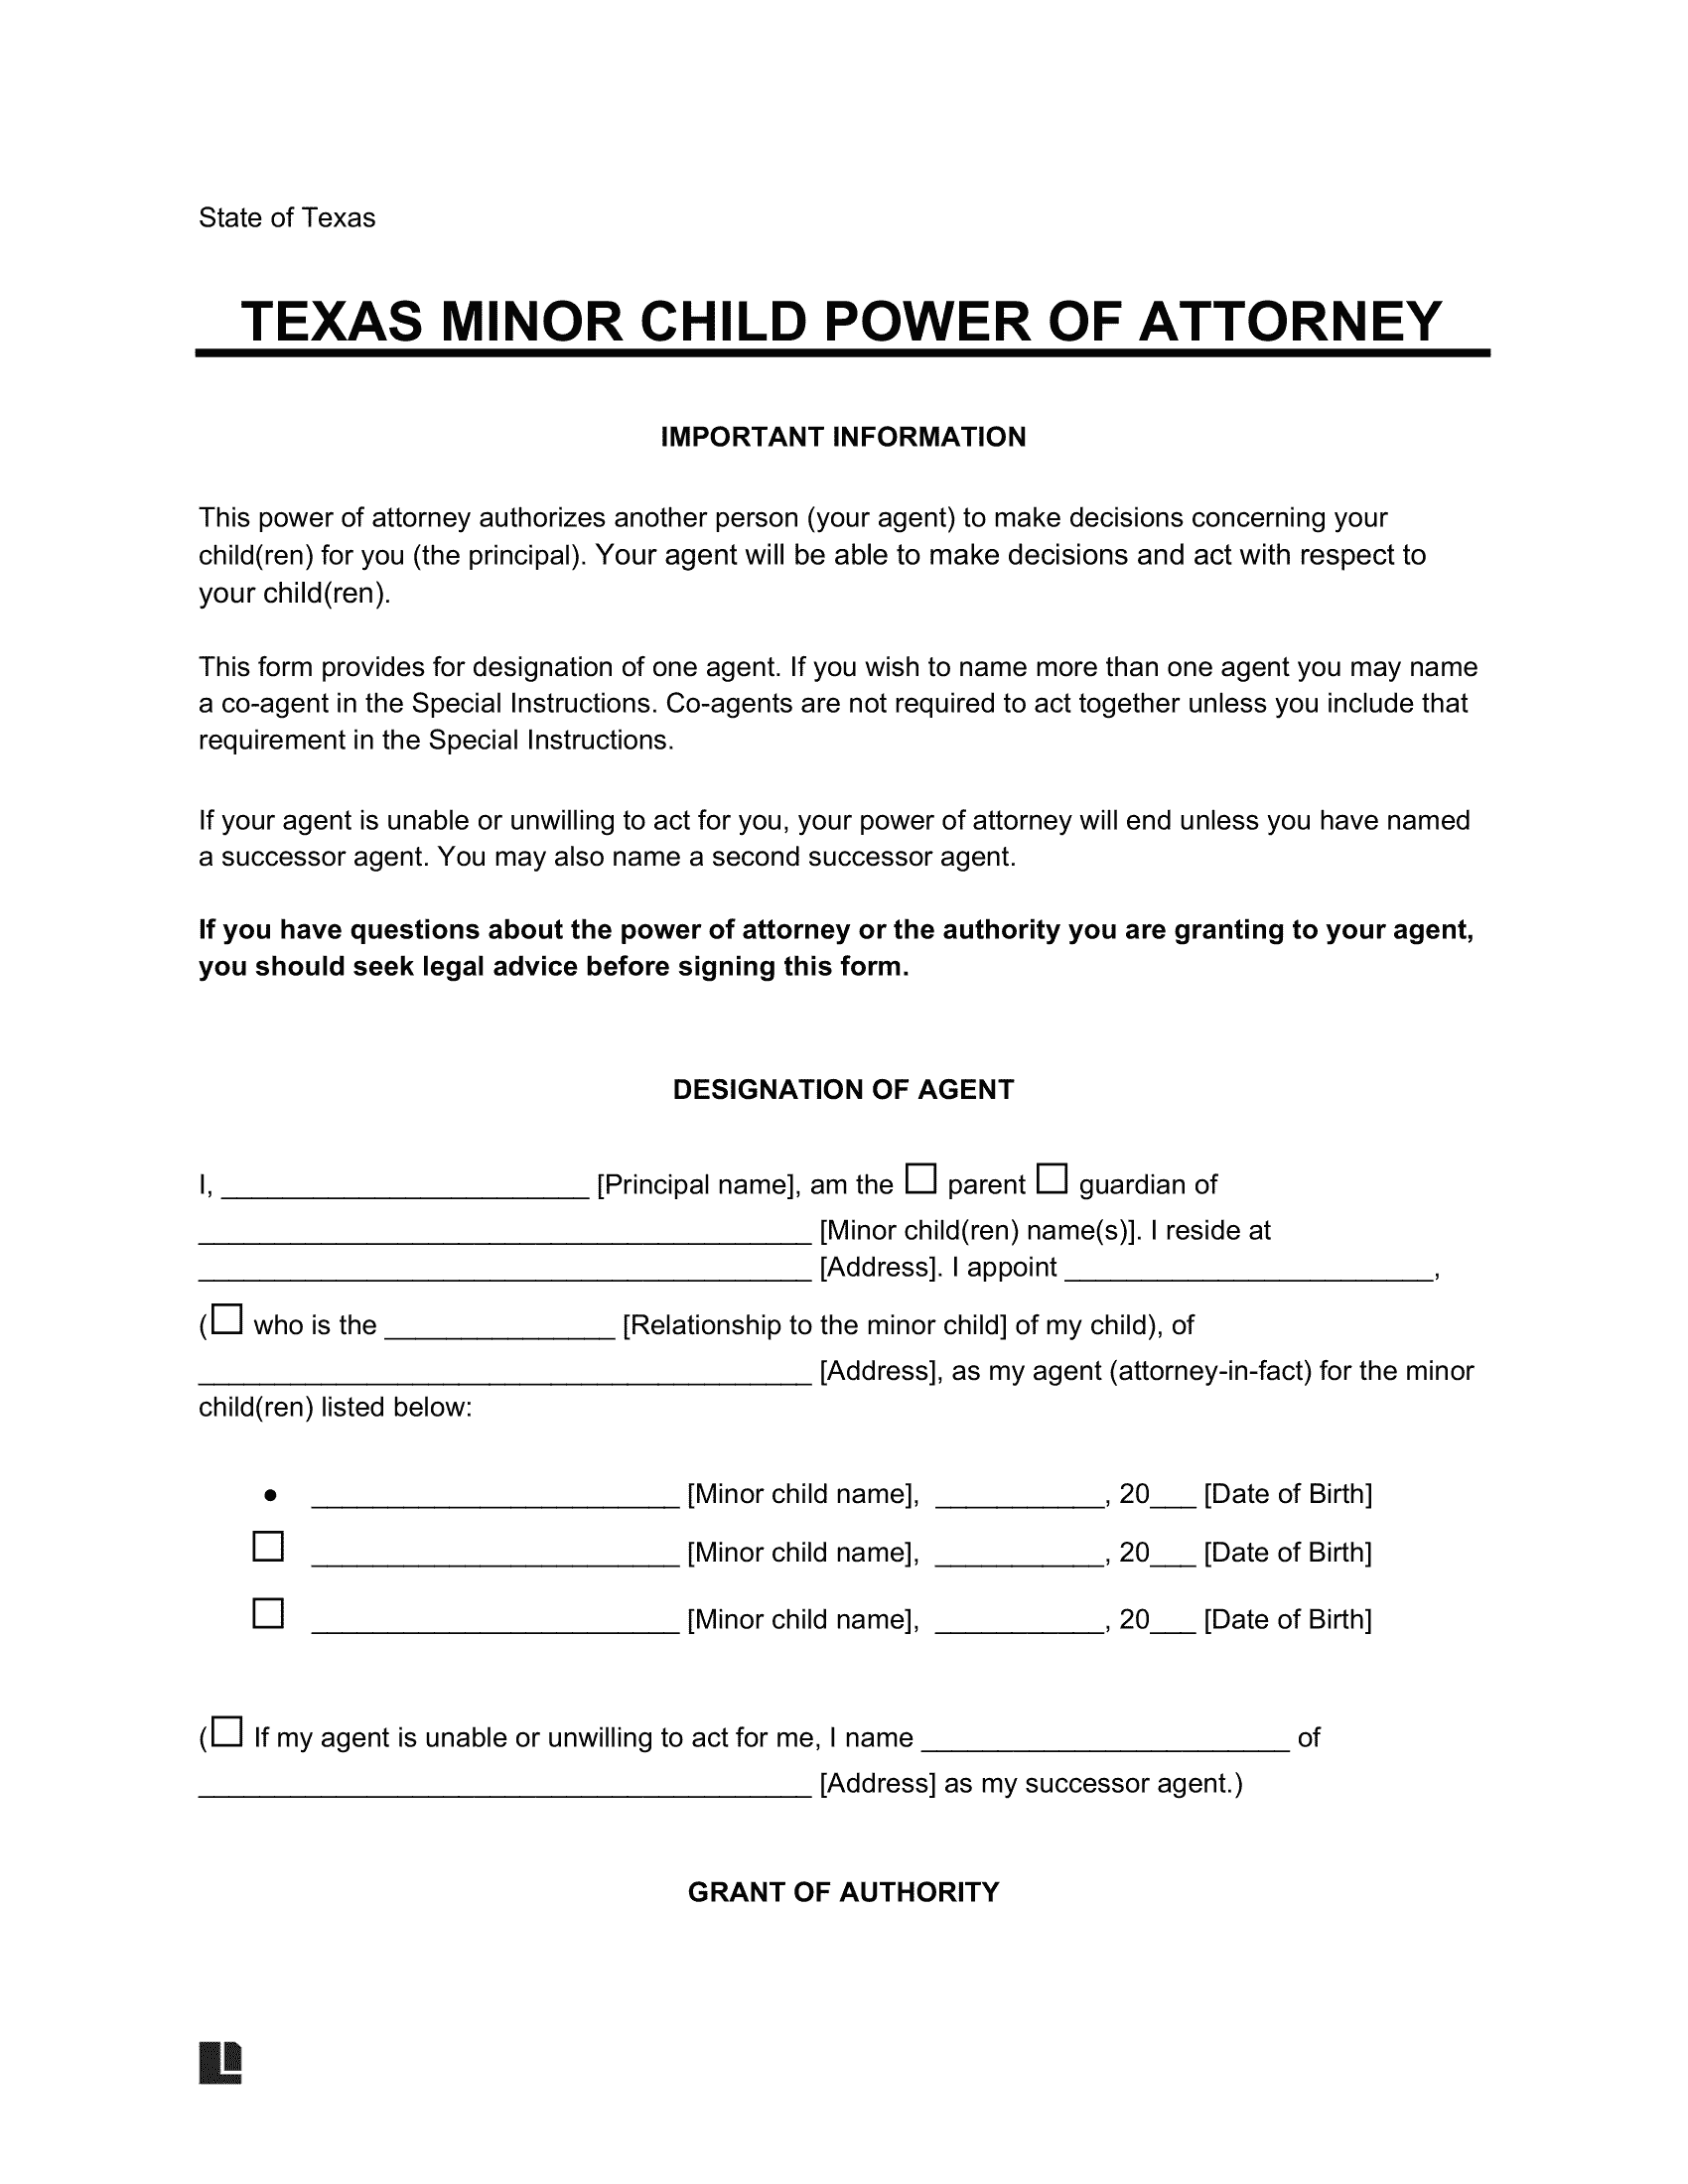 Texas Minor Child Power of Attorney Form